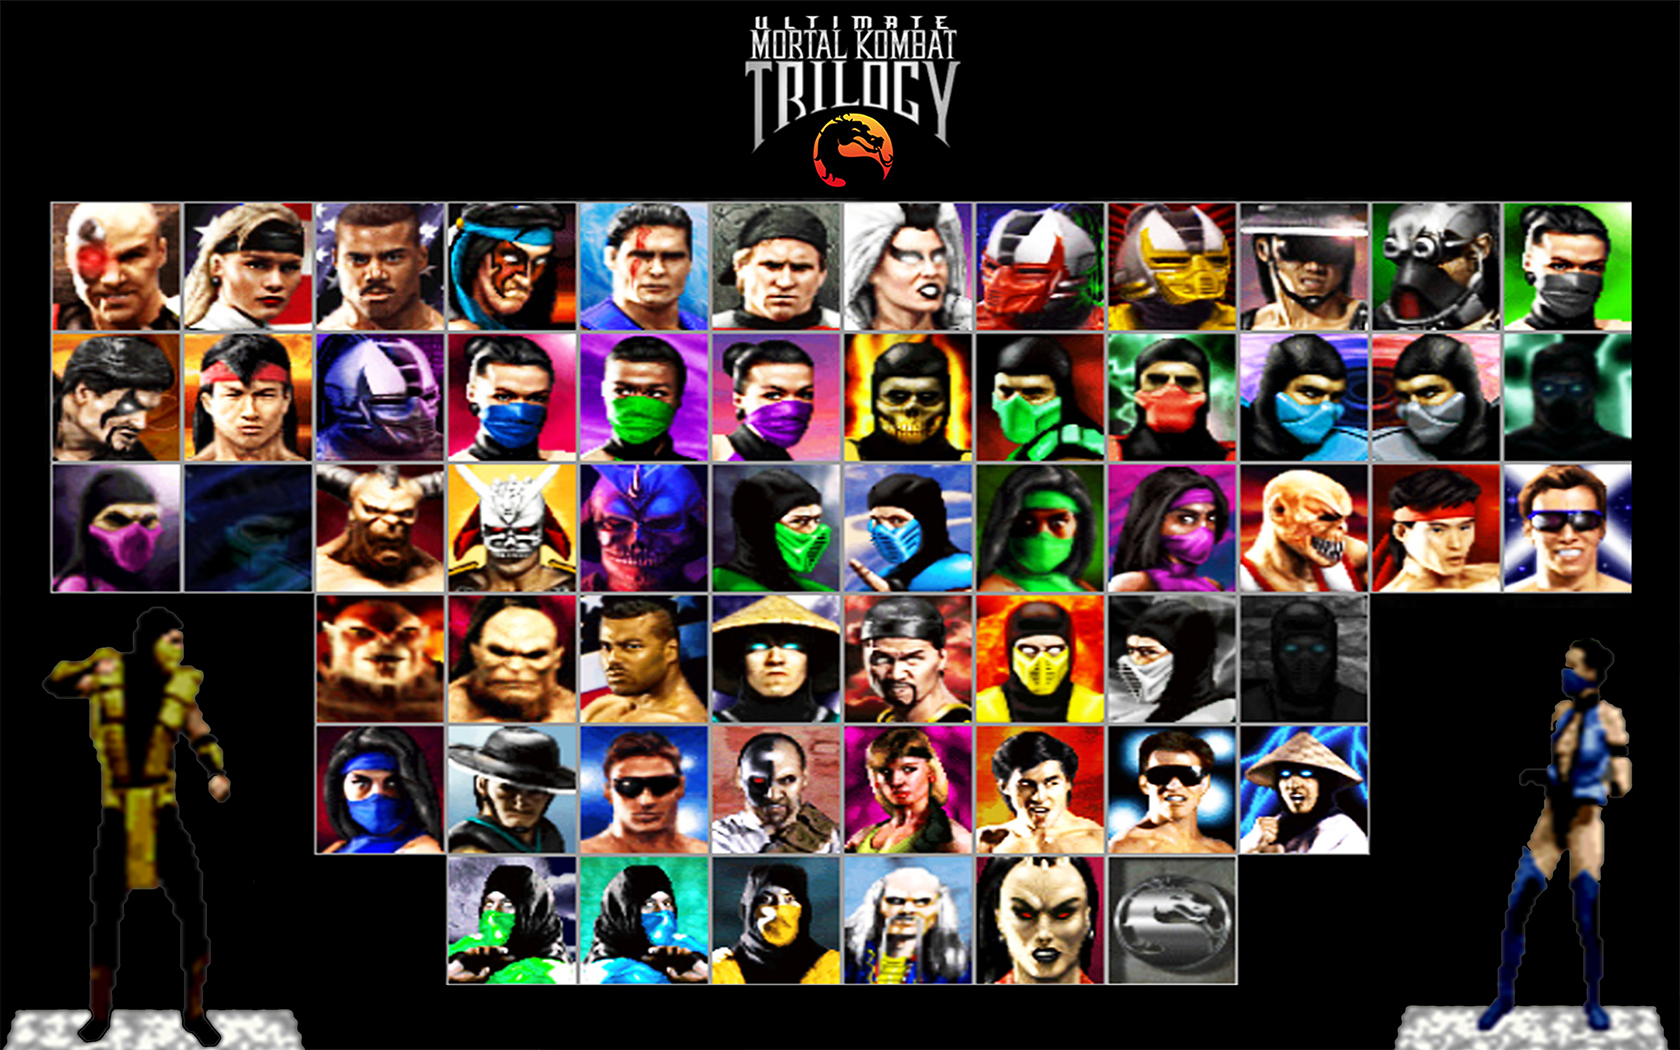 Мортал игры трилогия. MK 3/Ultimate/Trilogy. Ultimate Mortal Kombat 3 Trilogy. Мортал комбат Trilogy 3 Ultimate. Игра на mk3 Ultimate.